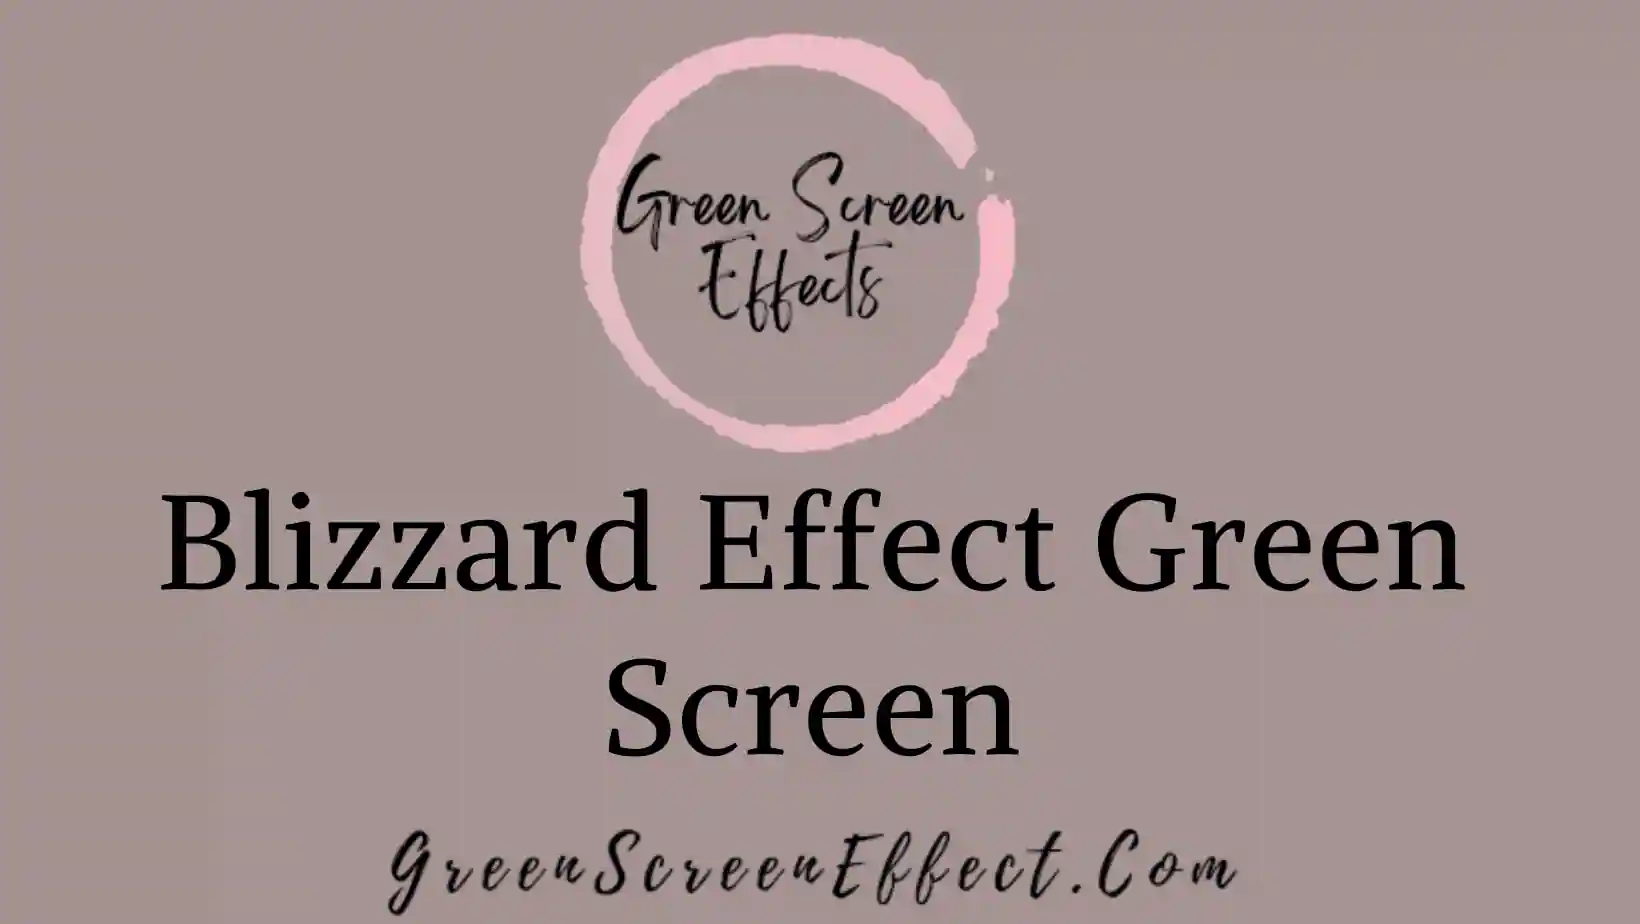 Blizzard Green Screen